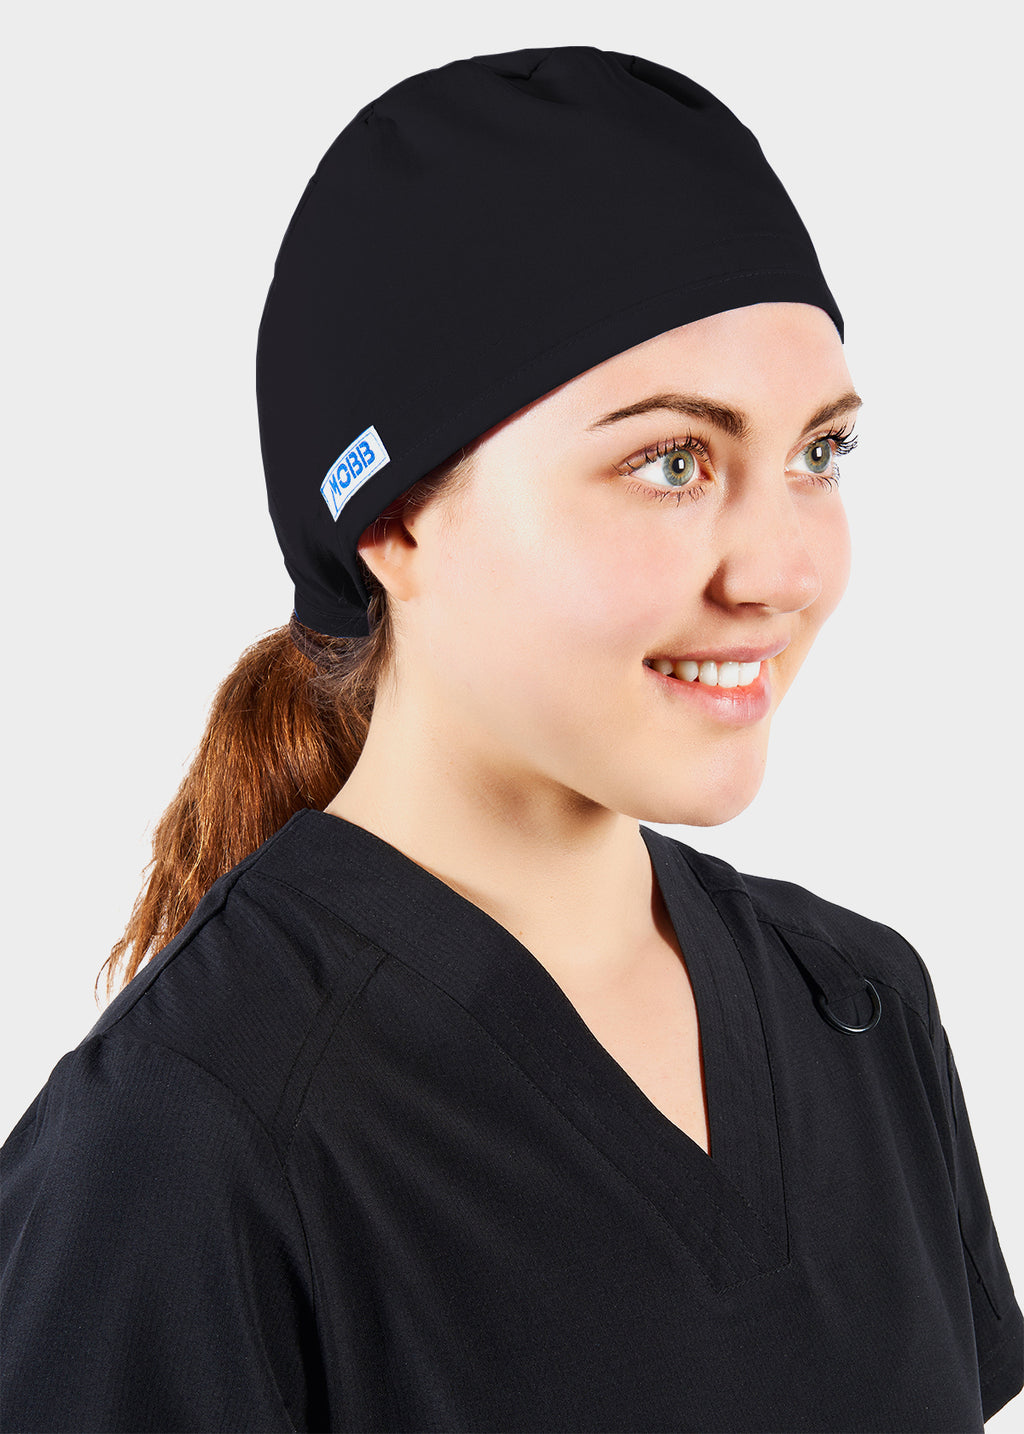 Product - MOBB Surgeon's Cap